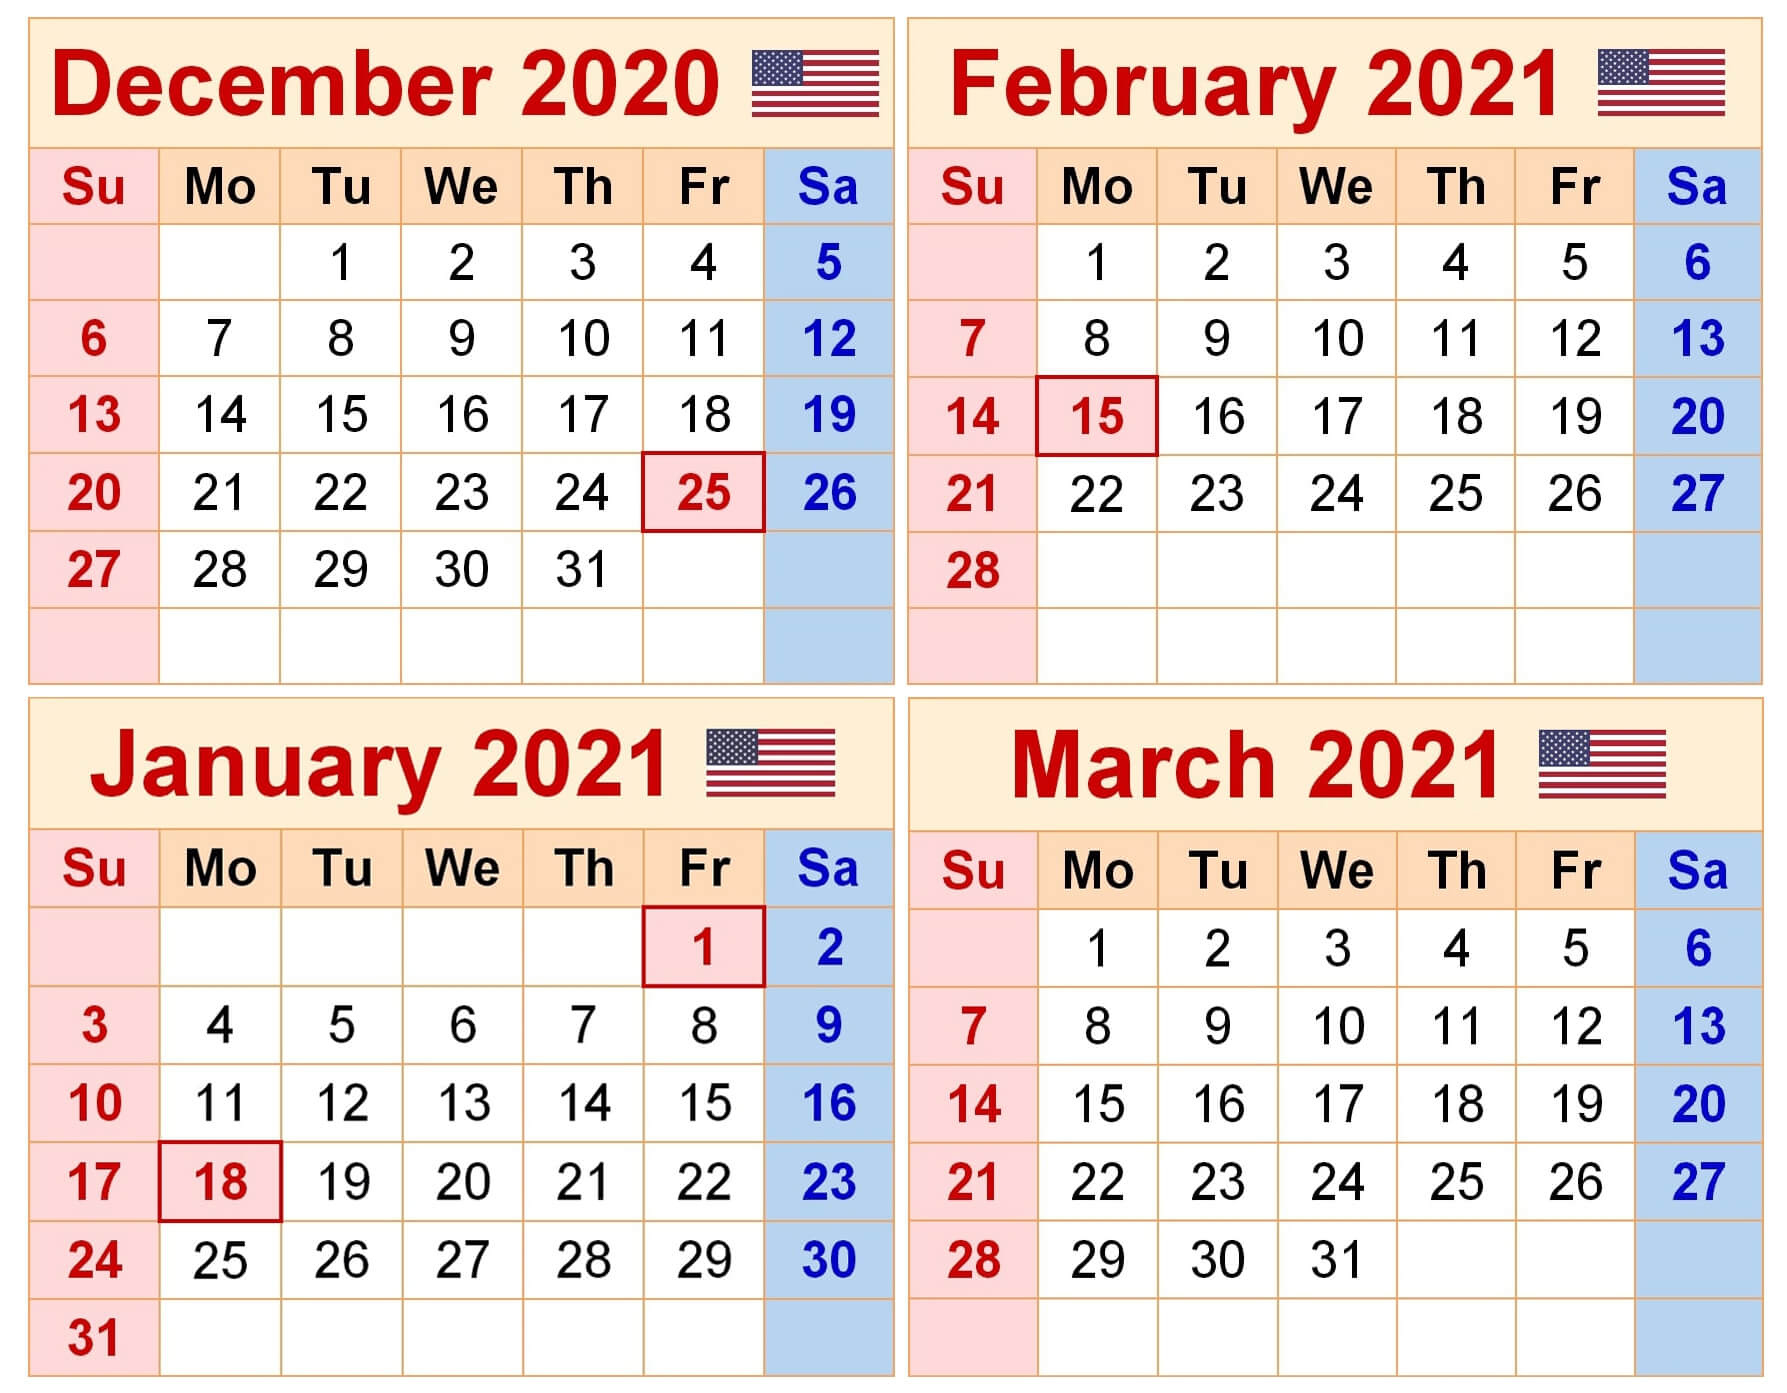 Blank 2020 December 2021 January Calendar With Holidays December 2020 And January 2021 Calendar With Holidays